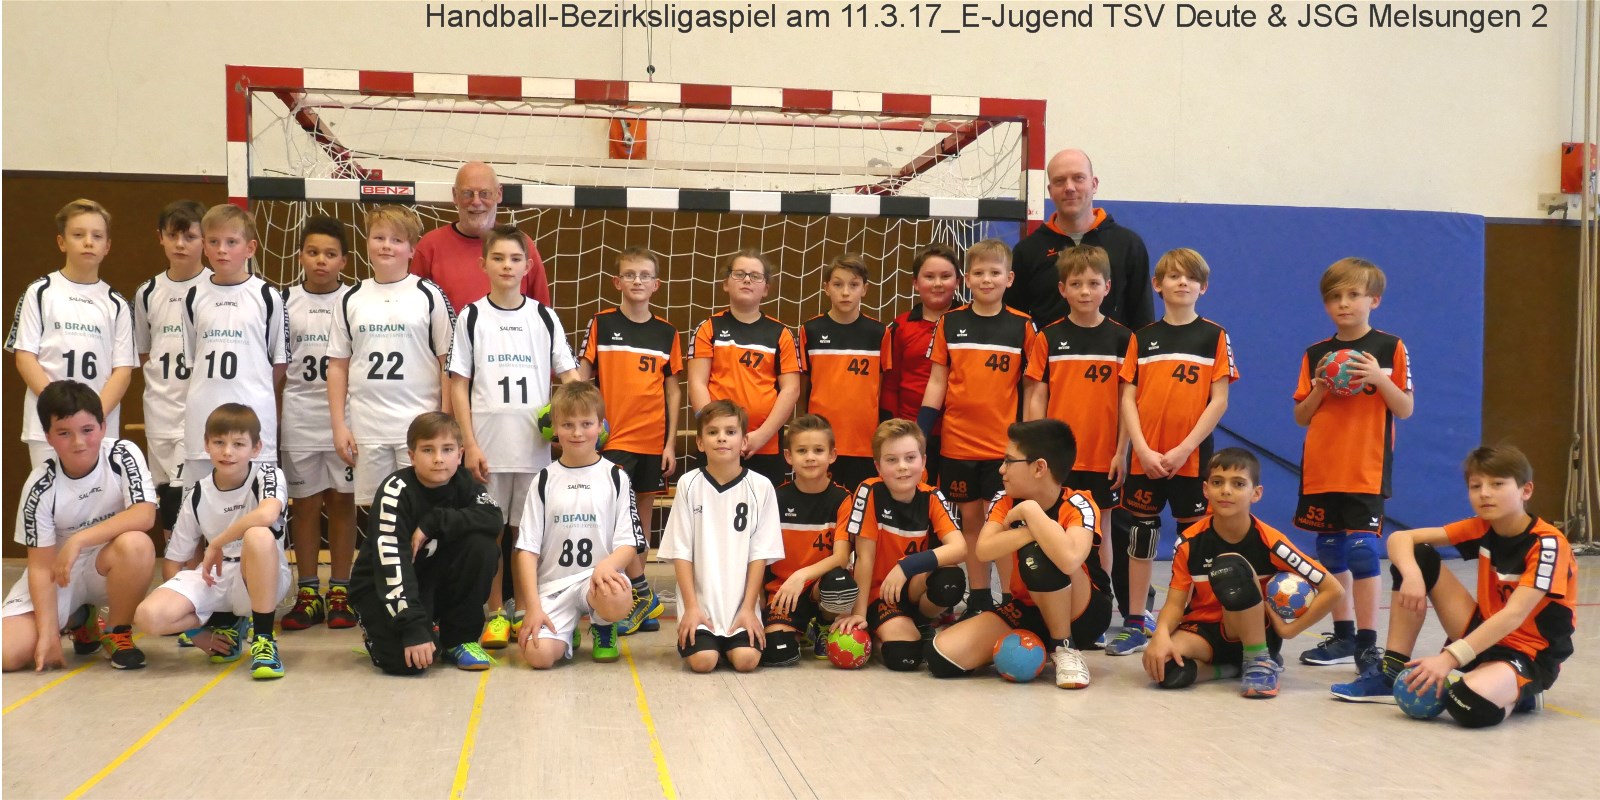 Web Handball E Jugend Deute und Mels2 11.3.17